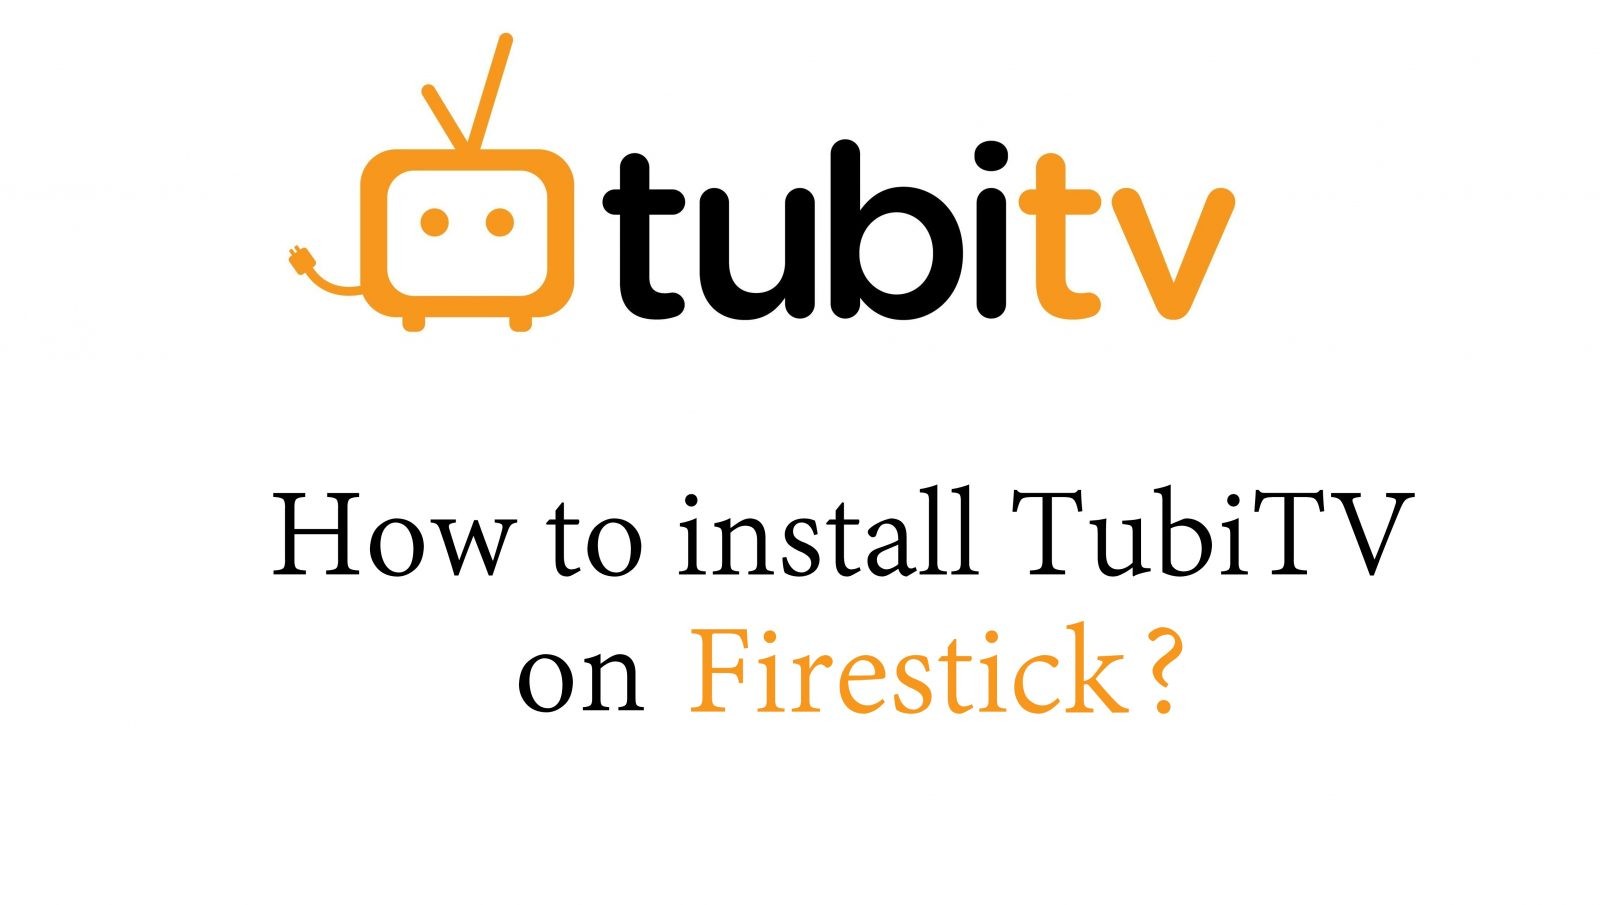 Tubi TV on Firestick